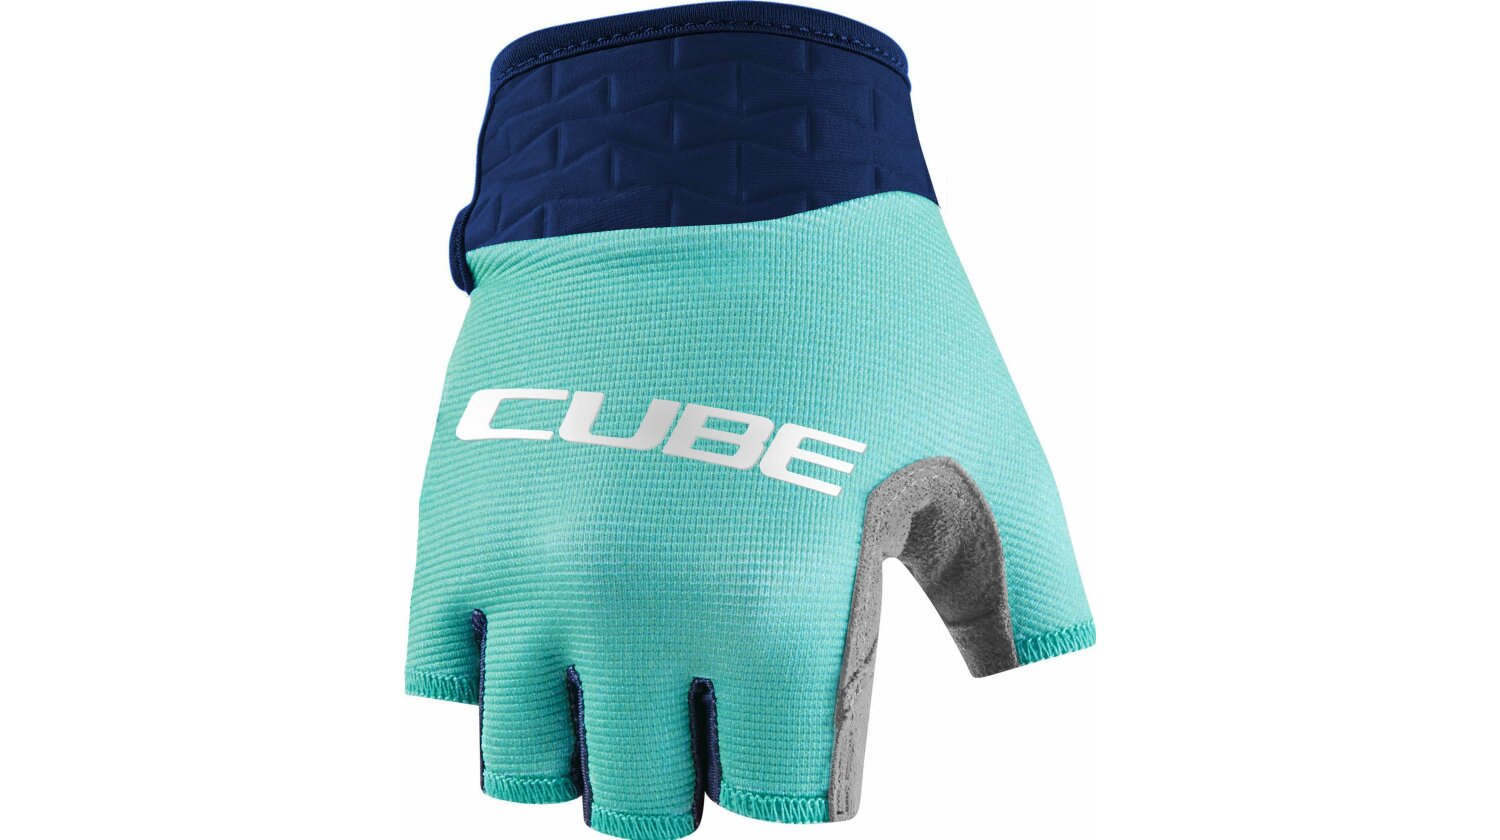 Cube Performance Junior Handschuhe kurz...